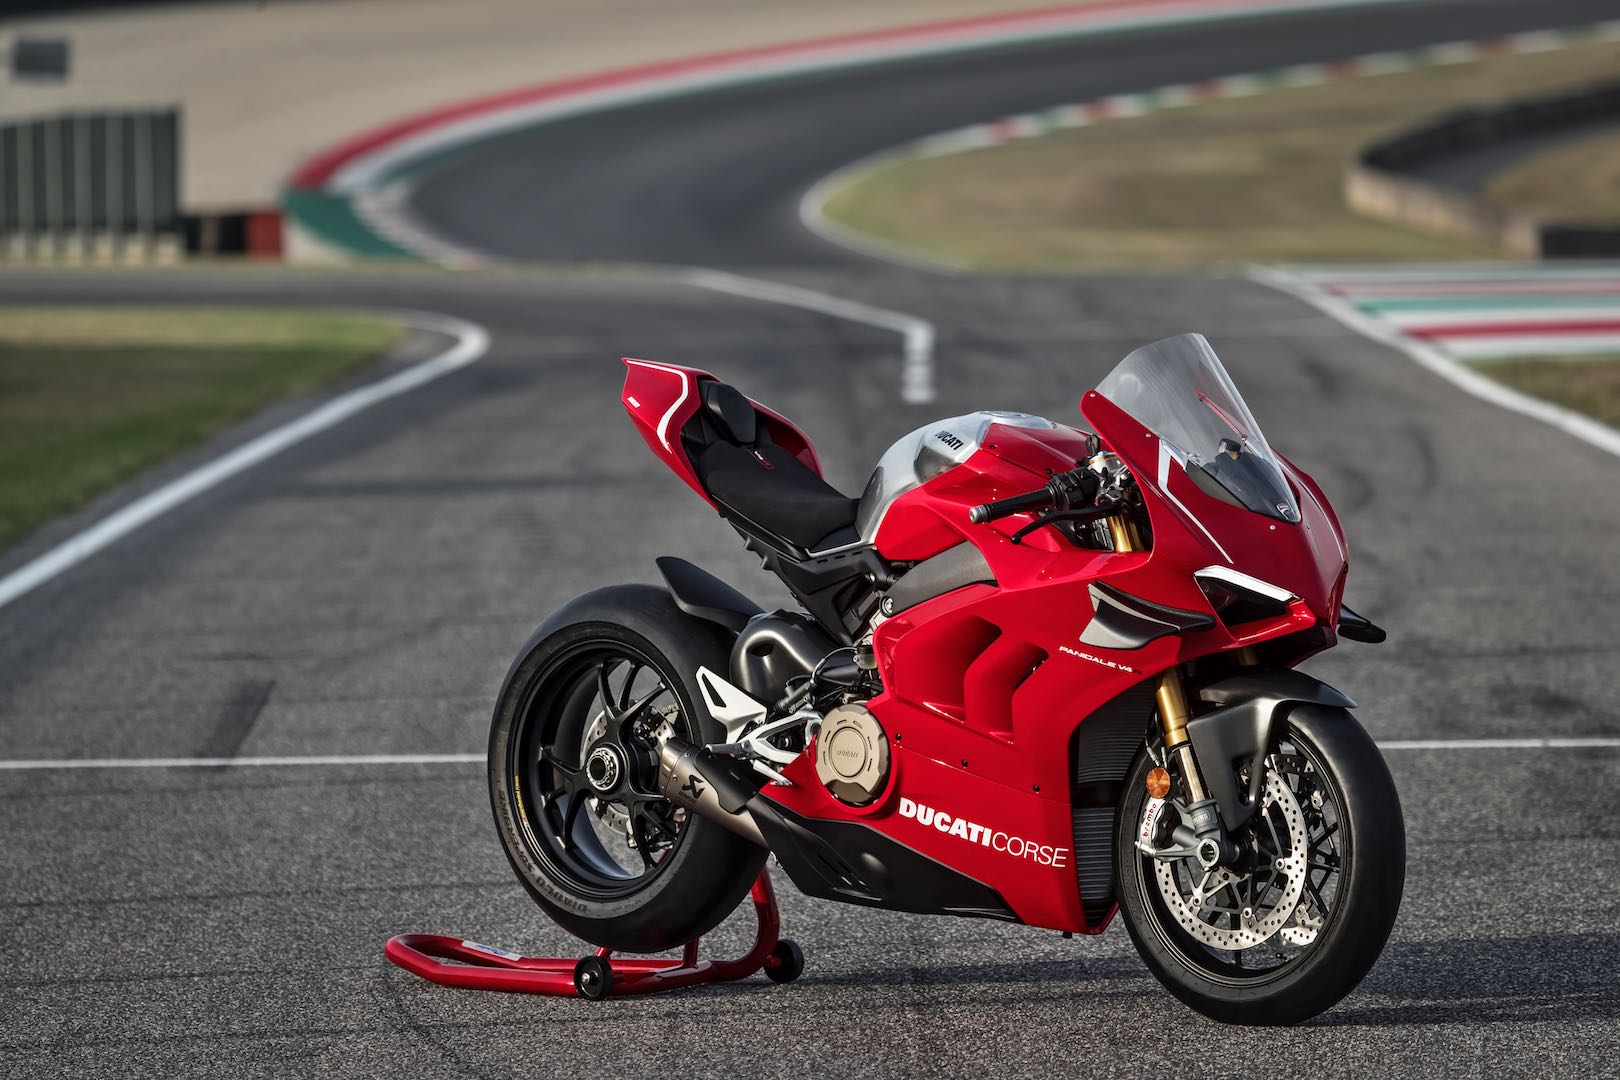 Ducati Panigale V4 R 2019 photo - 3